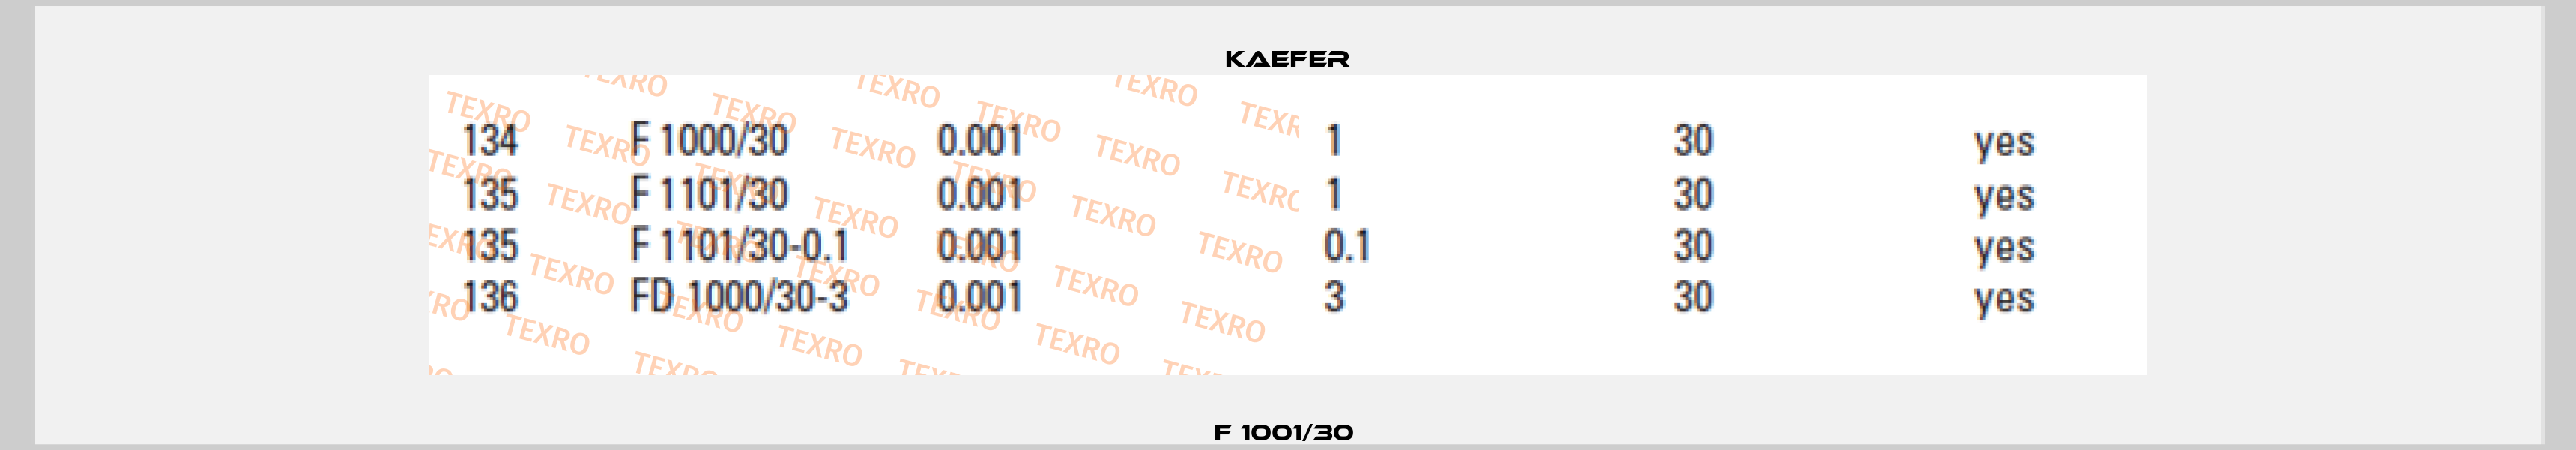 F 1001/30  Kaefer